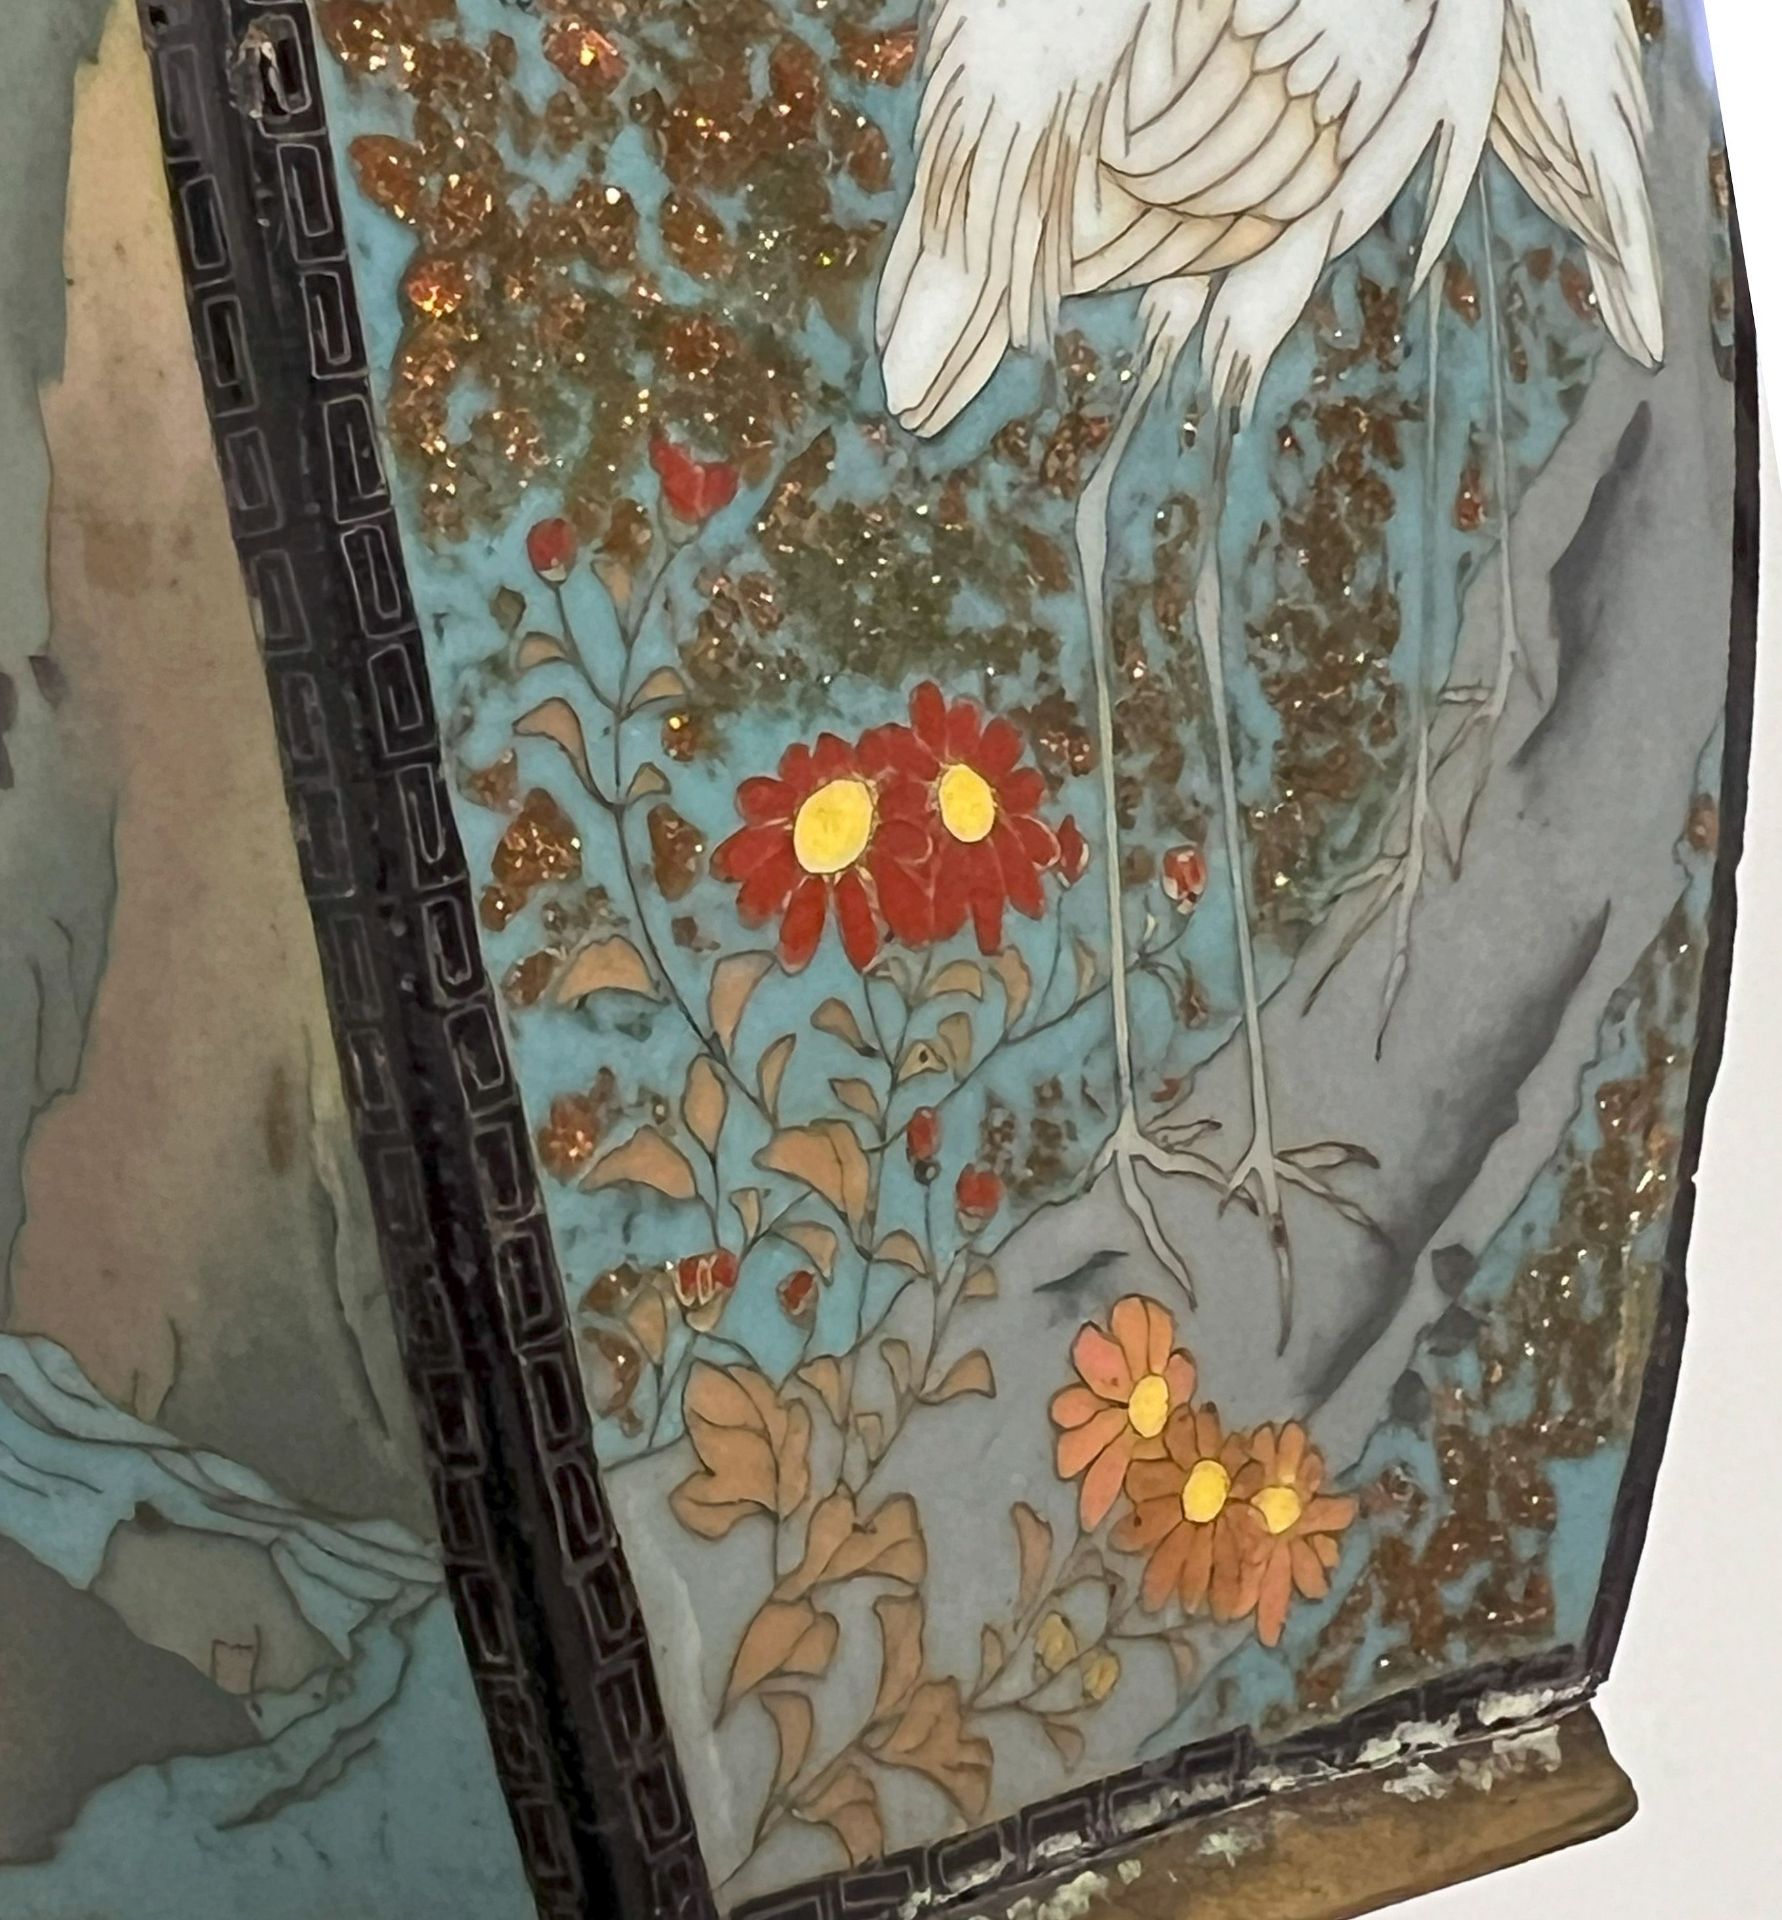 Asien, frühe Cloisonné Vase mit feinen Landschafts- und Vogelmotiven, interessante, kantige Form, - Image 7 of 11